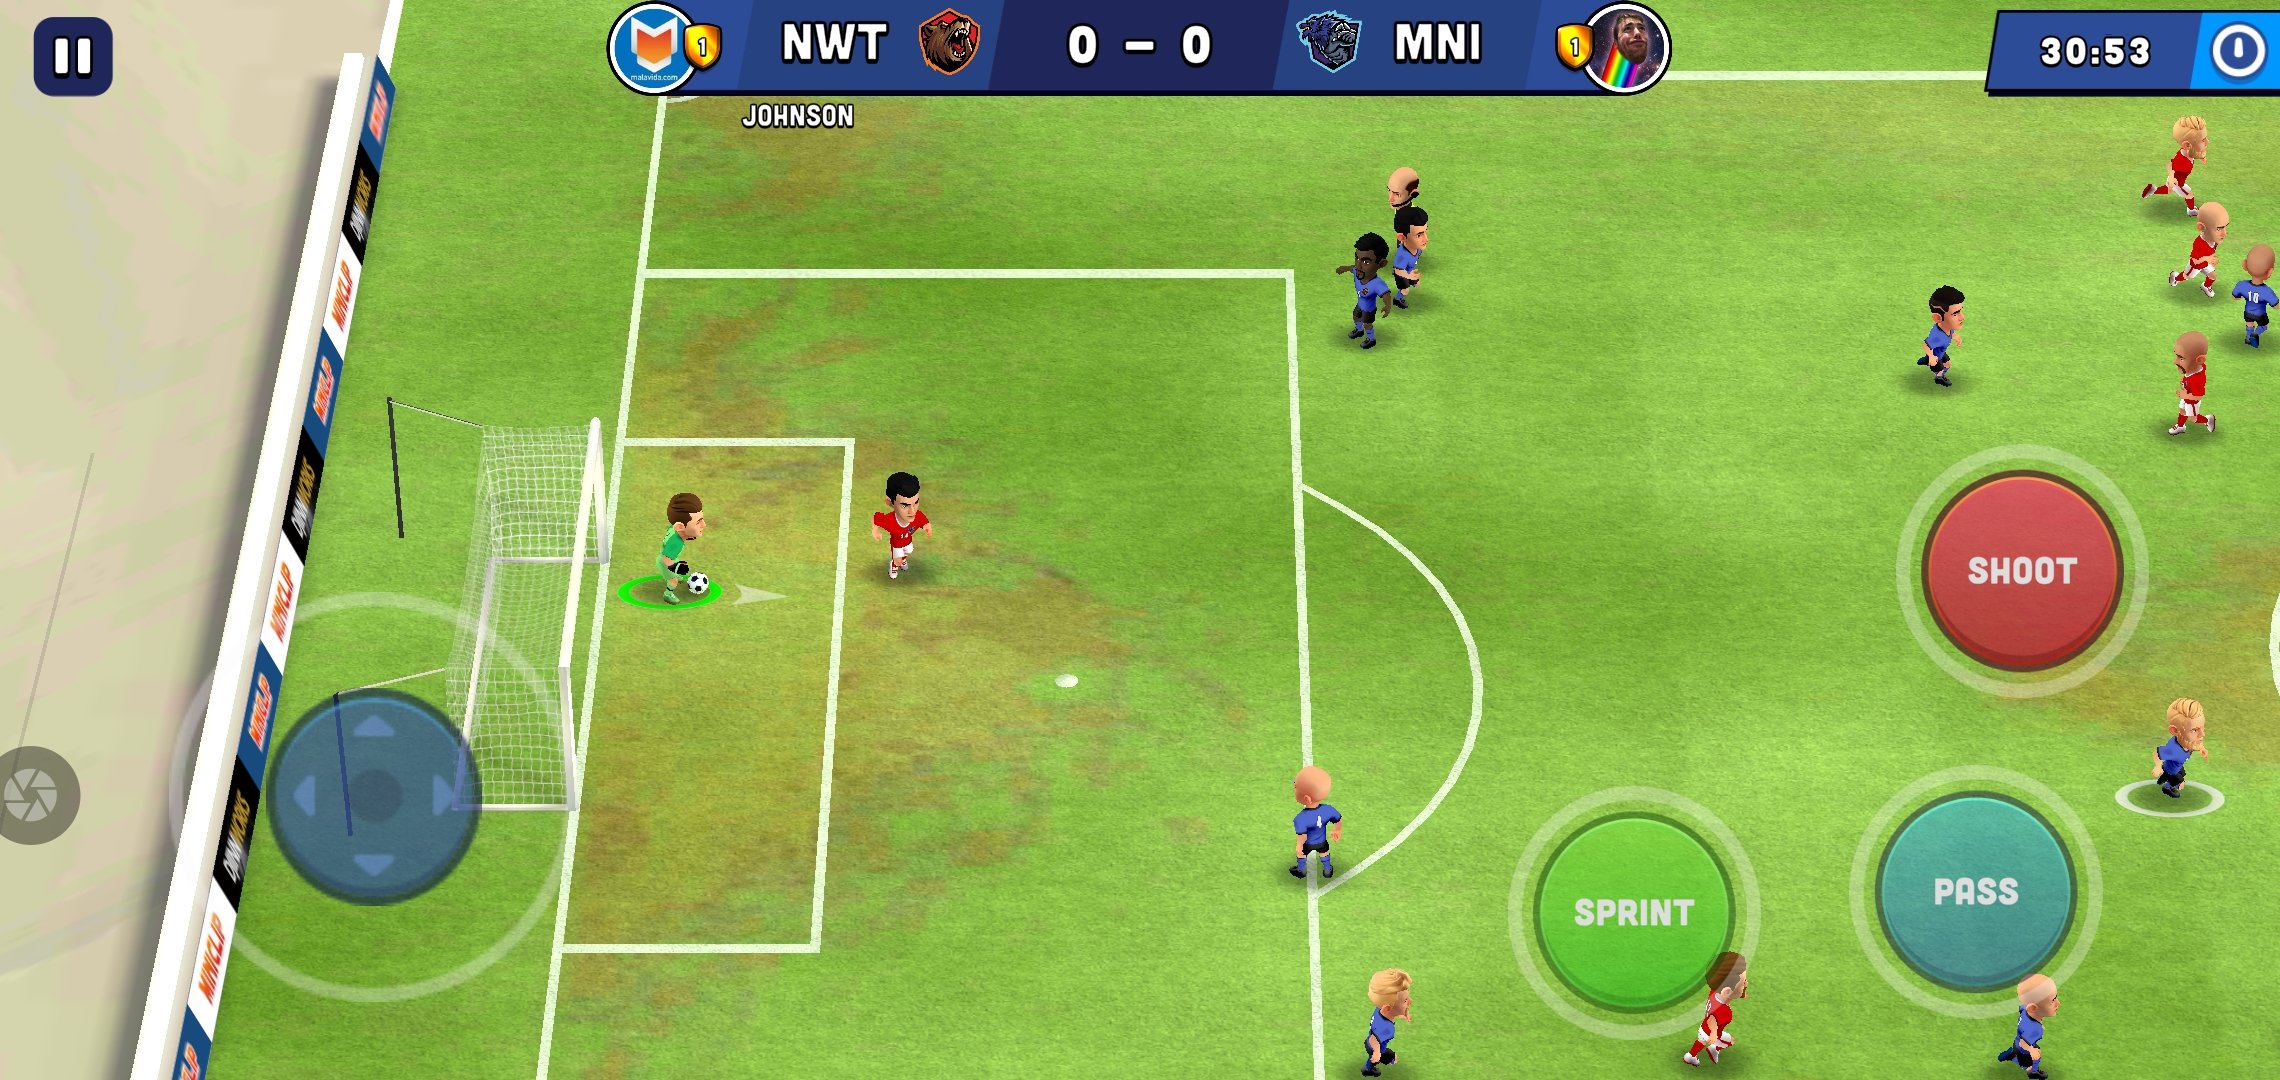 Mini Football 1 4 1 Android用ダウンロードapk無料